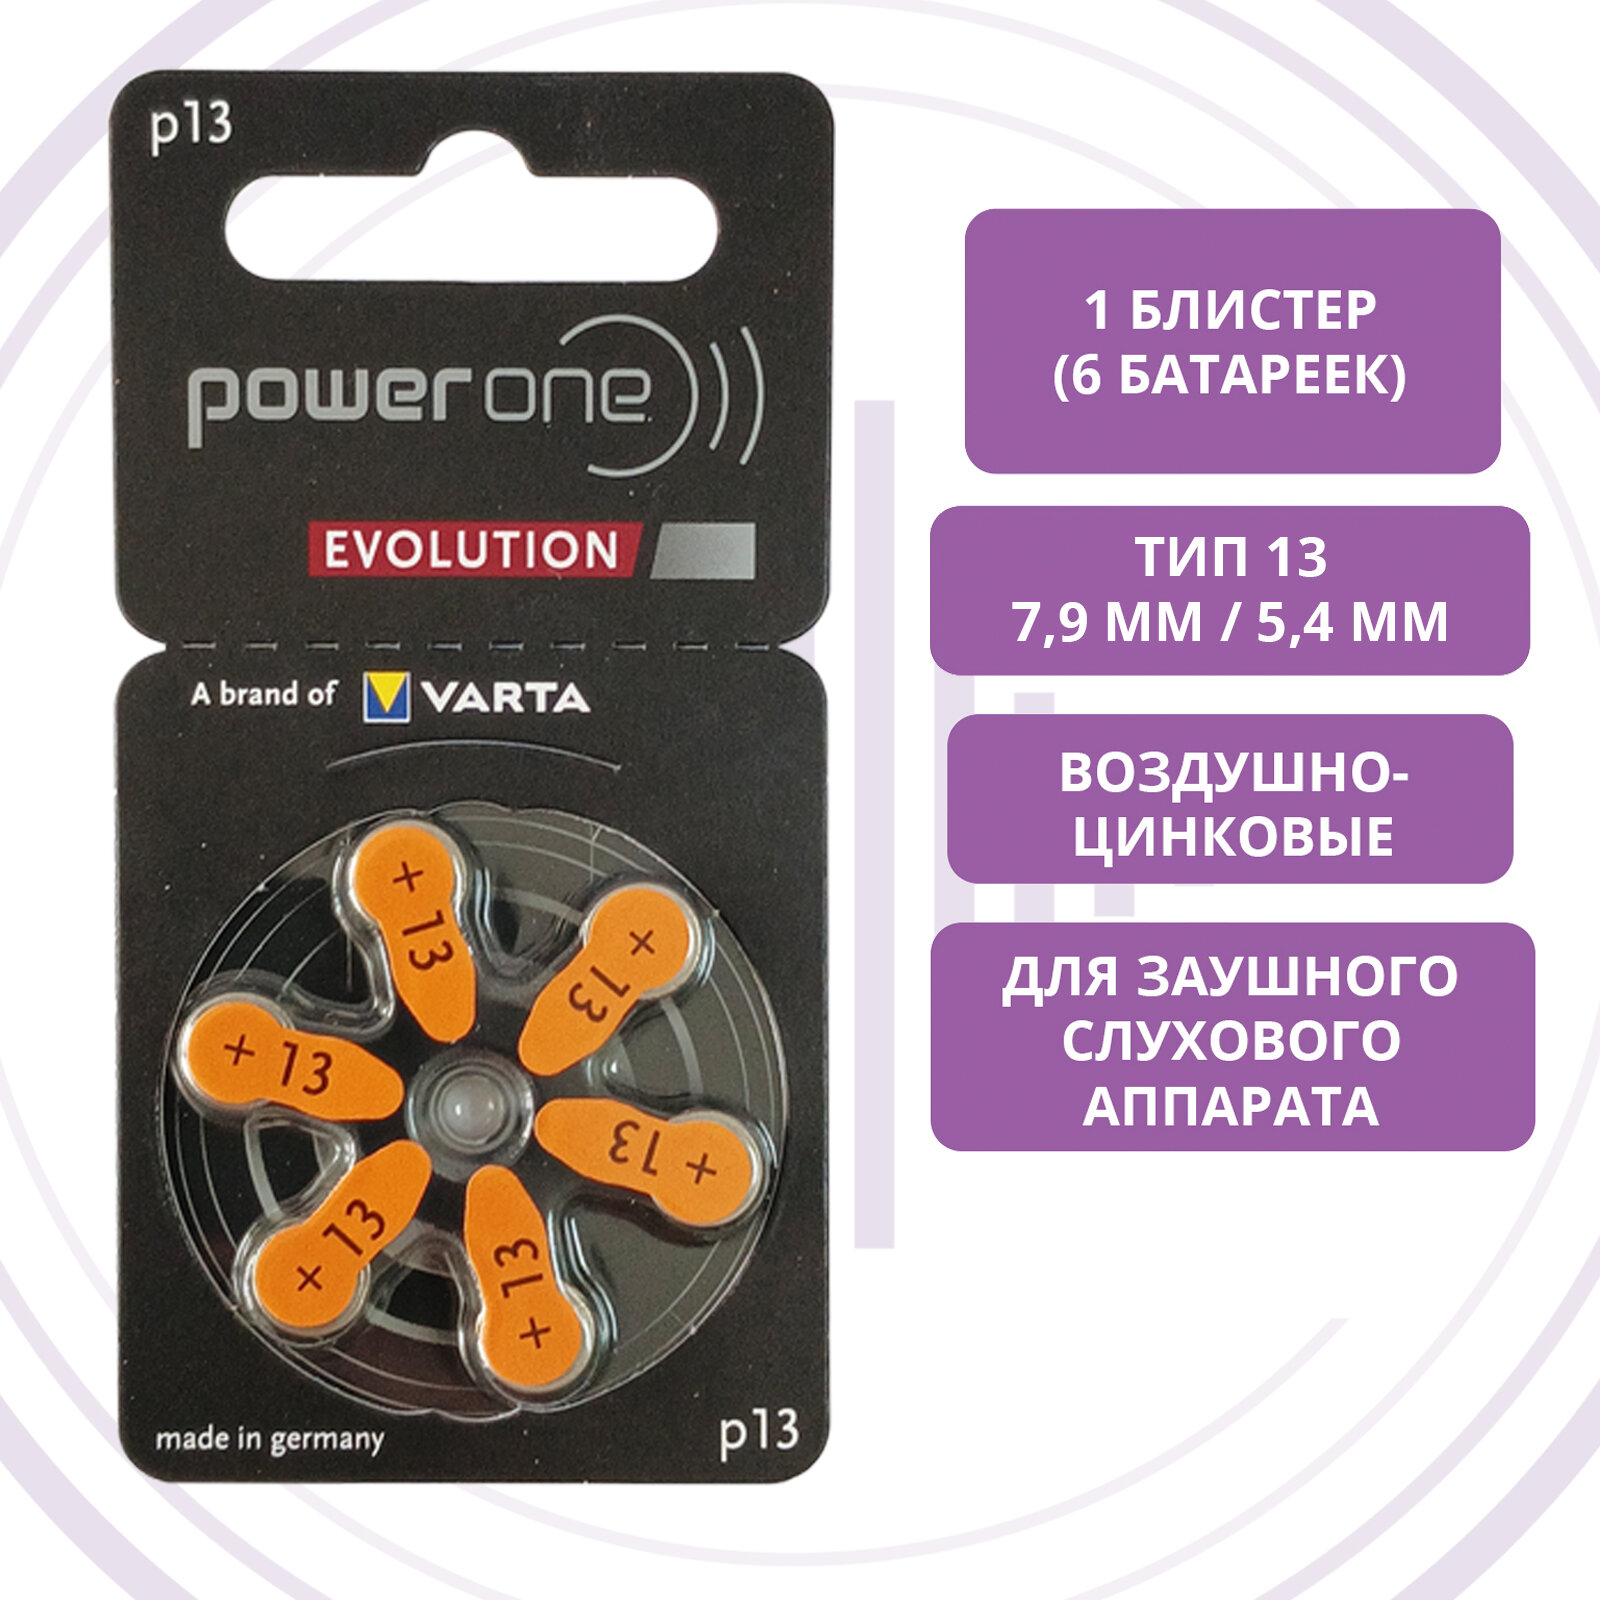 Батарейки PowerOne Evolution p13 (PR48) для слухового аппарата, 1 блистер (6 батареек)